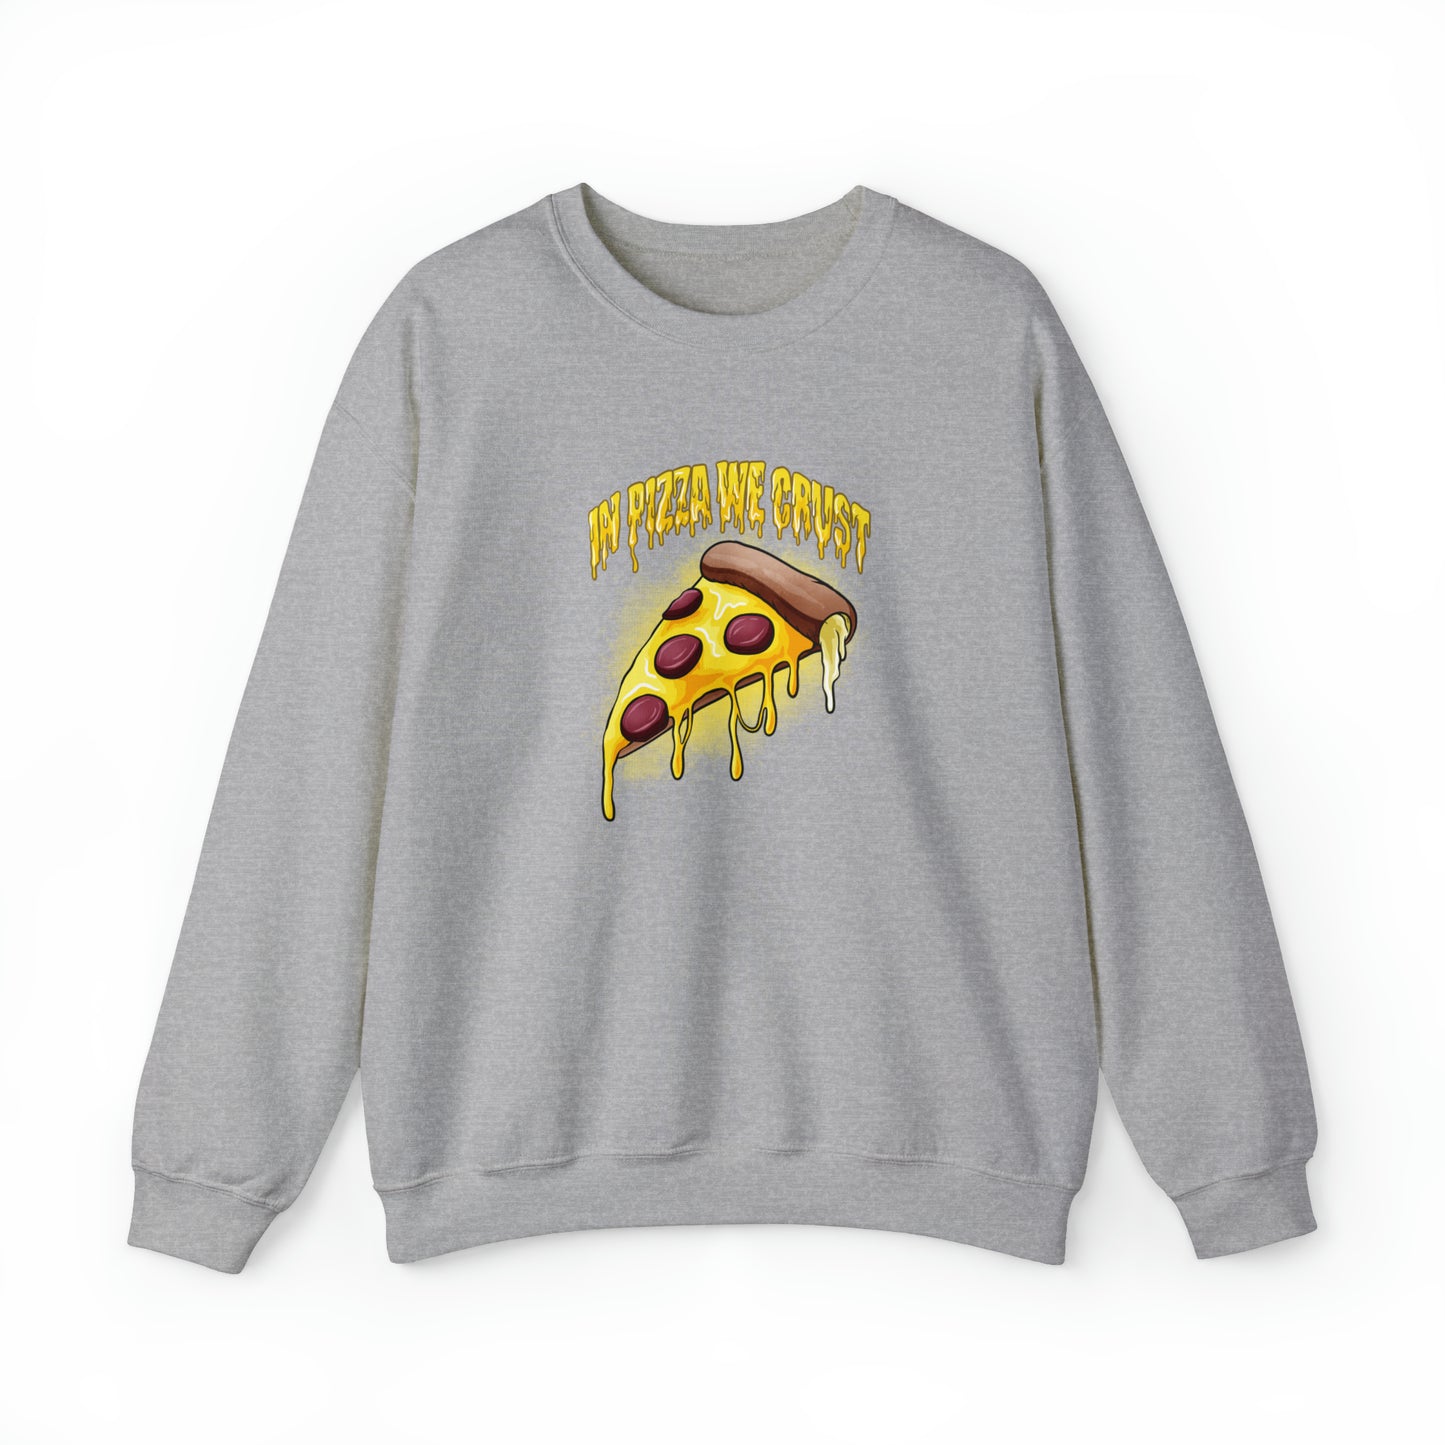 Custom Parody Crewneck Sweatshirt, In Pizza We Crust Design